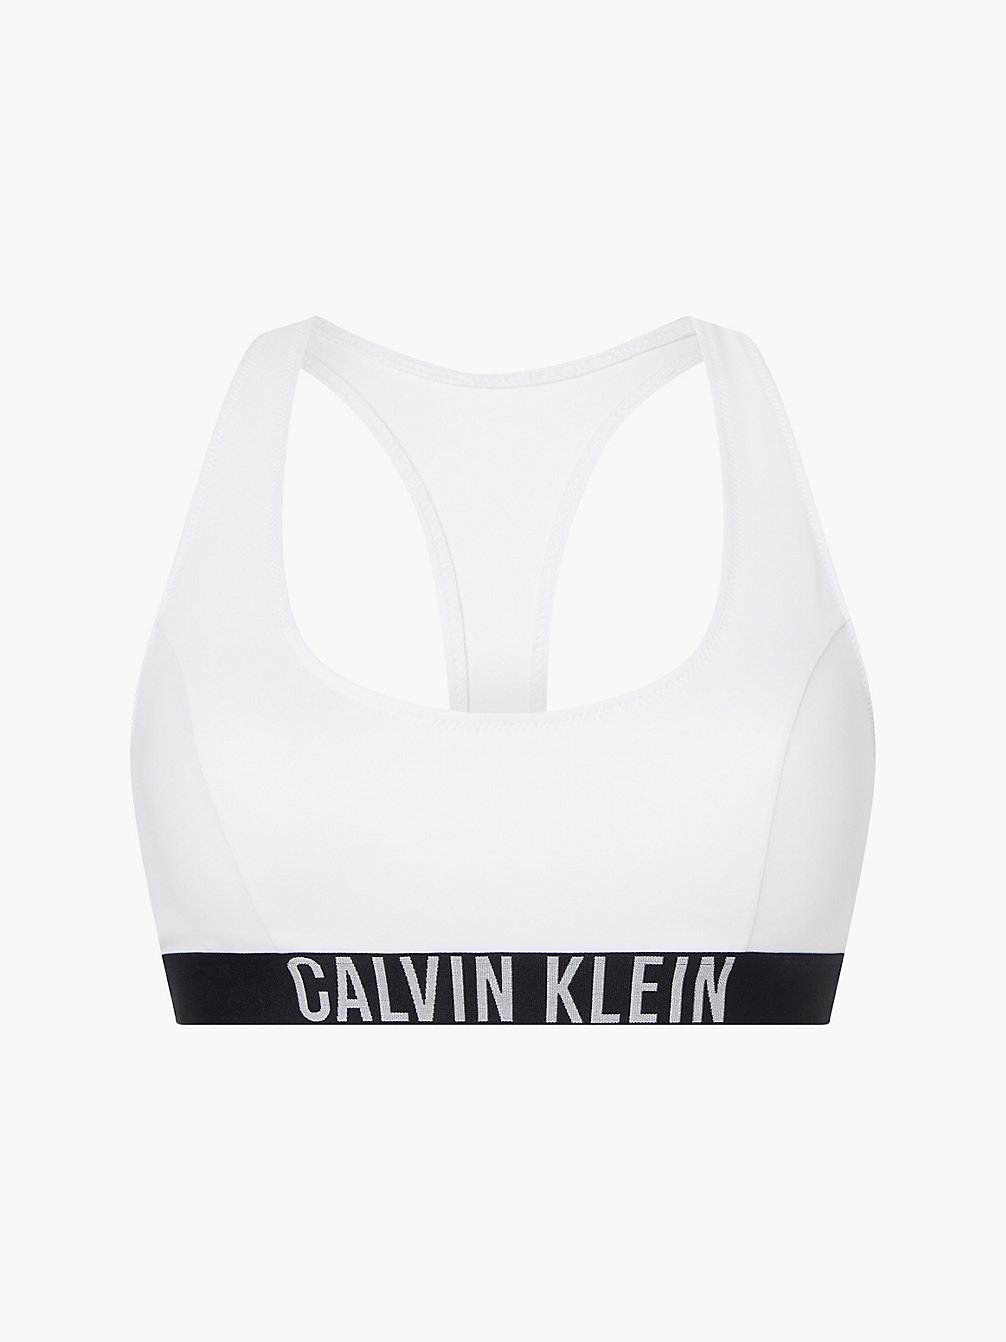 PVH CLASSIC WHITE Bralette Bikini-Top - Intense Power undefined Damen Calvin Klein